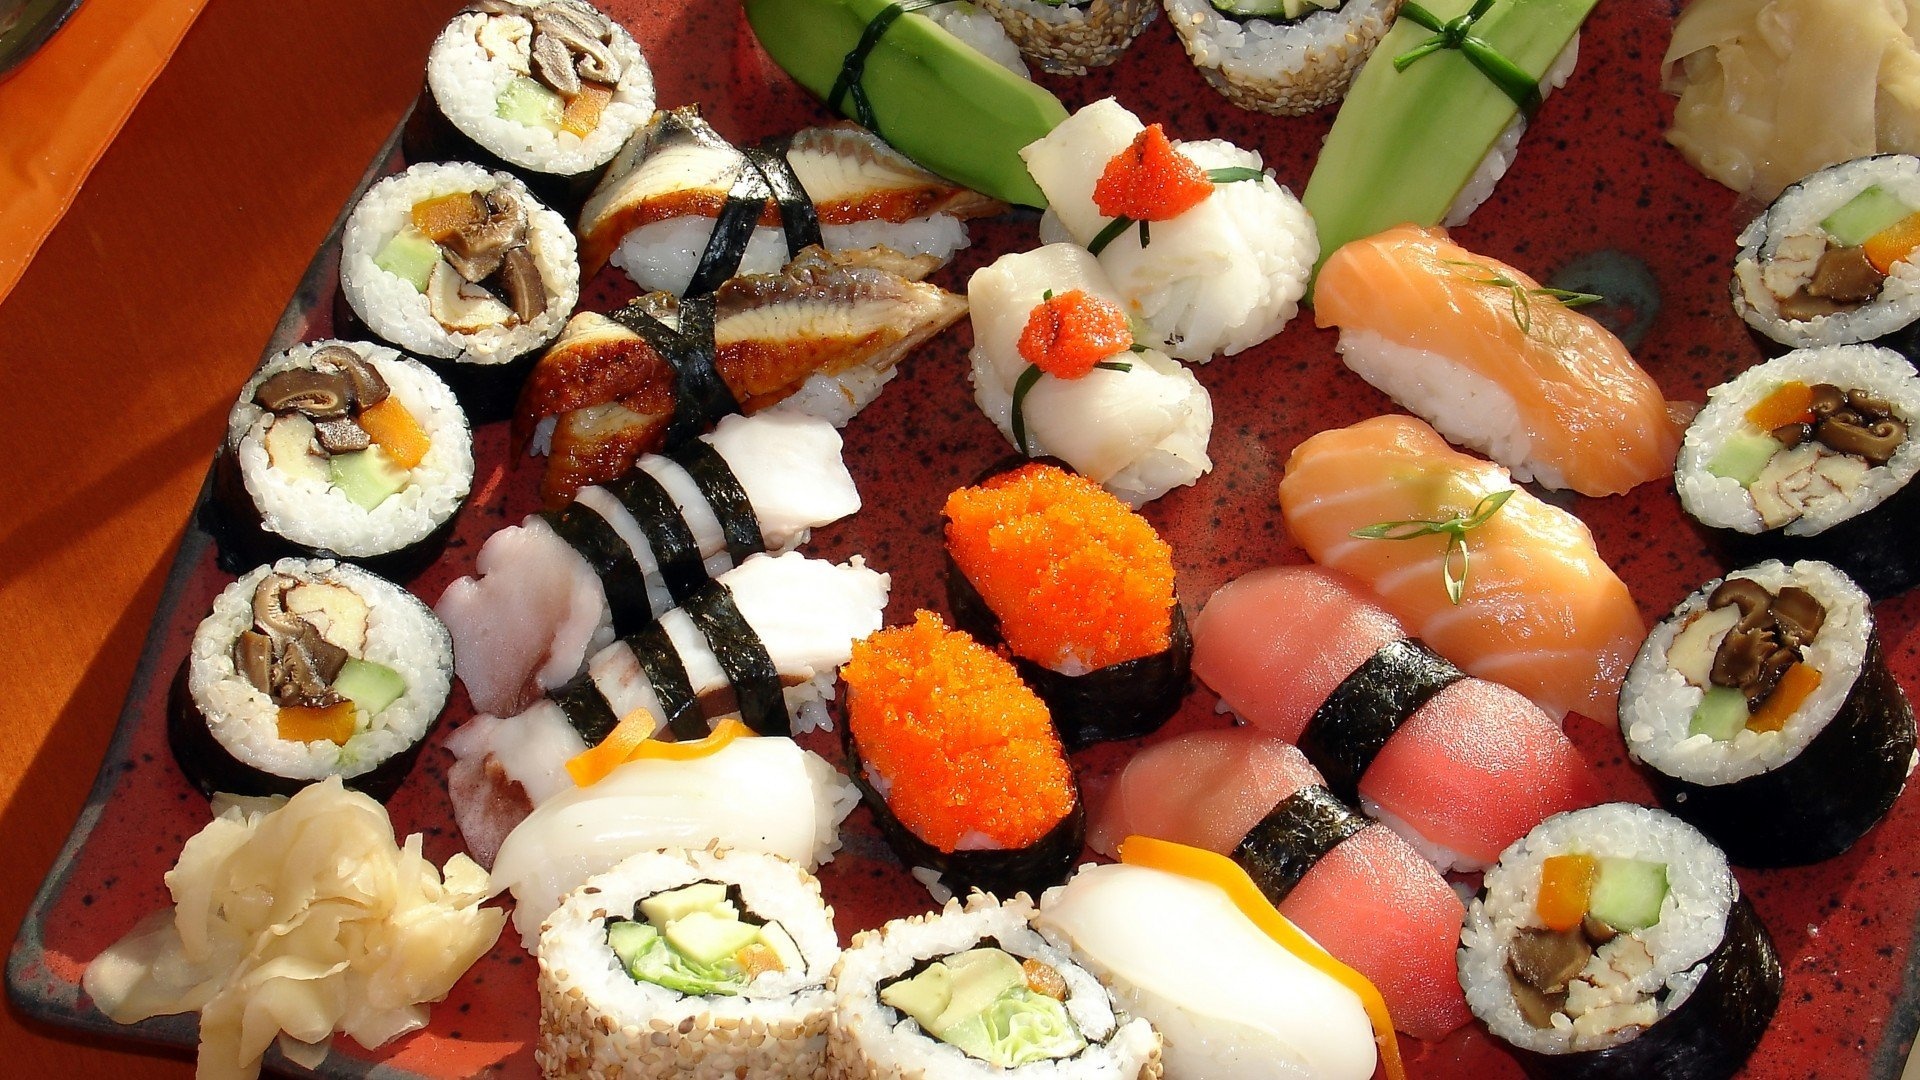 Sushi: Vinegared rice accompanied by raw fish, Tobiko, Gari. 1920x1080 Full HD Wallpaper.